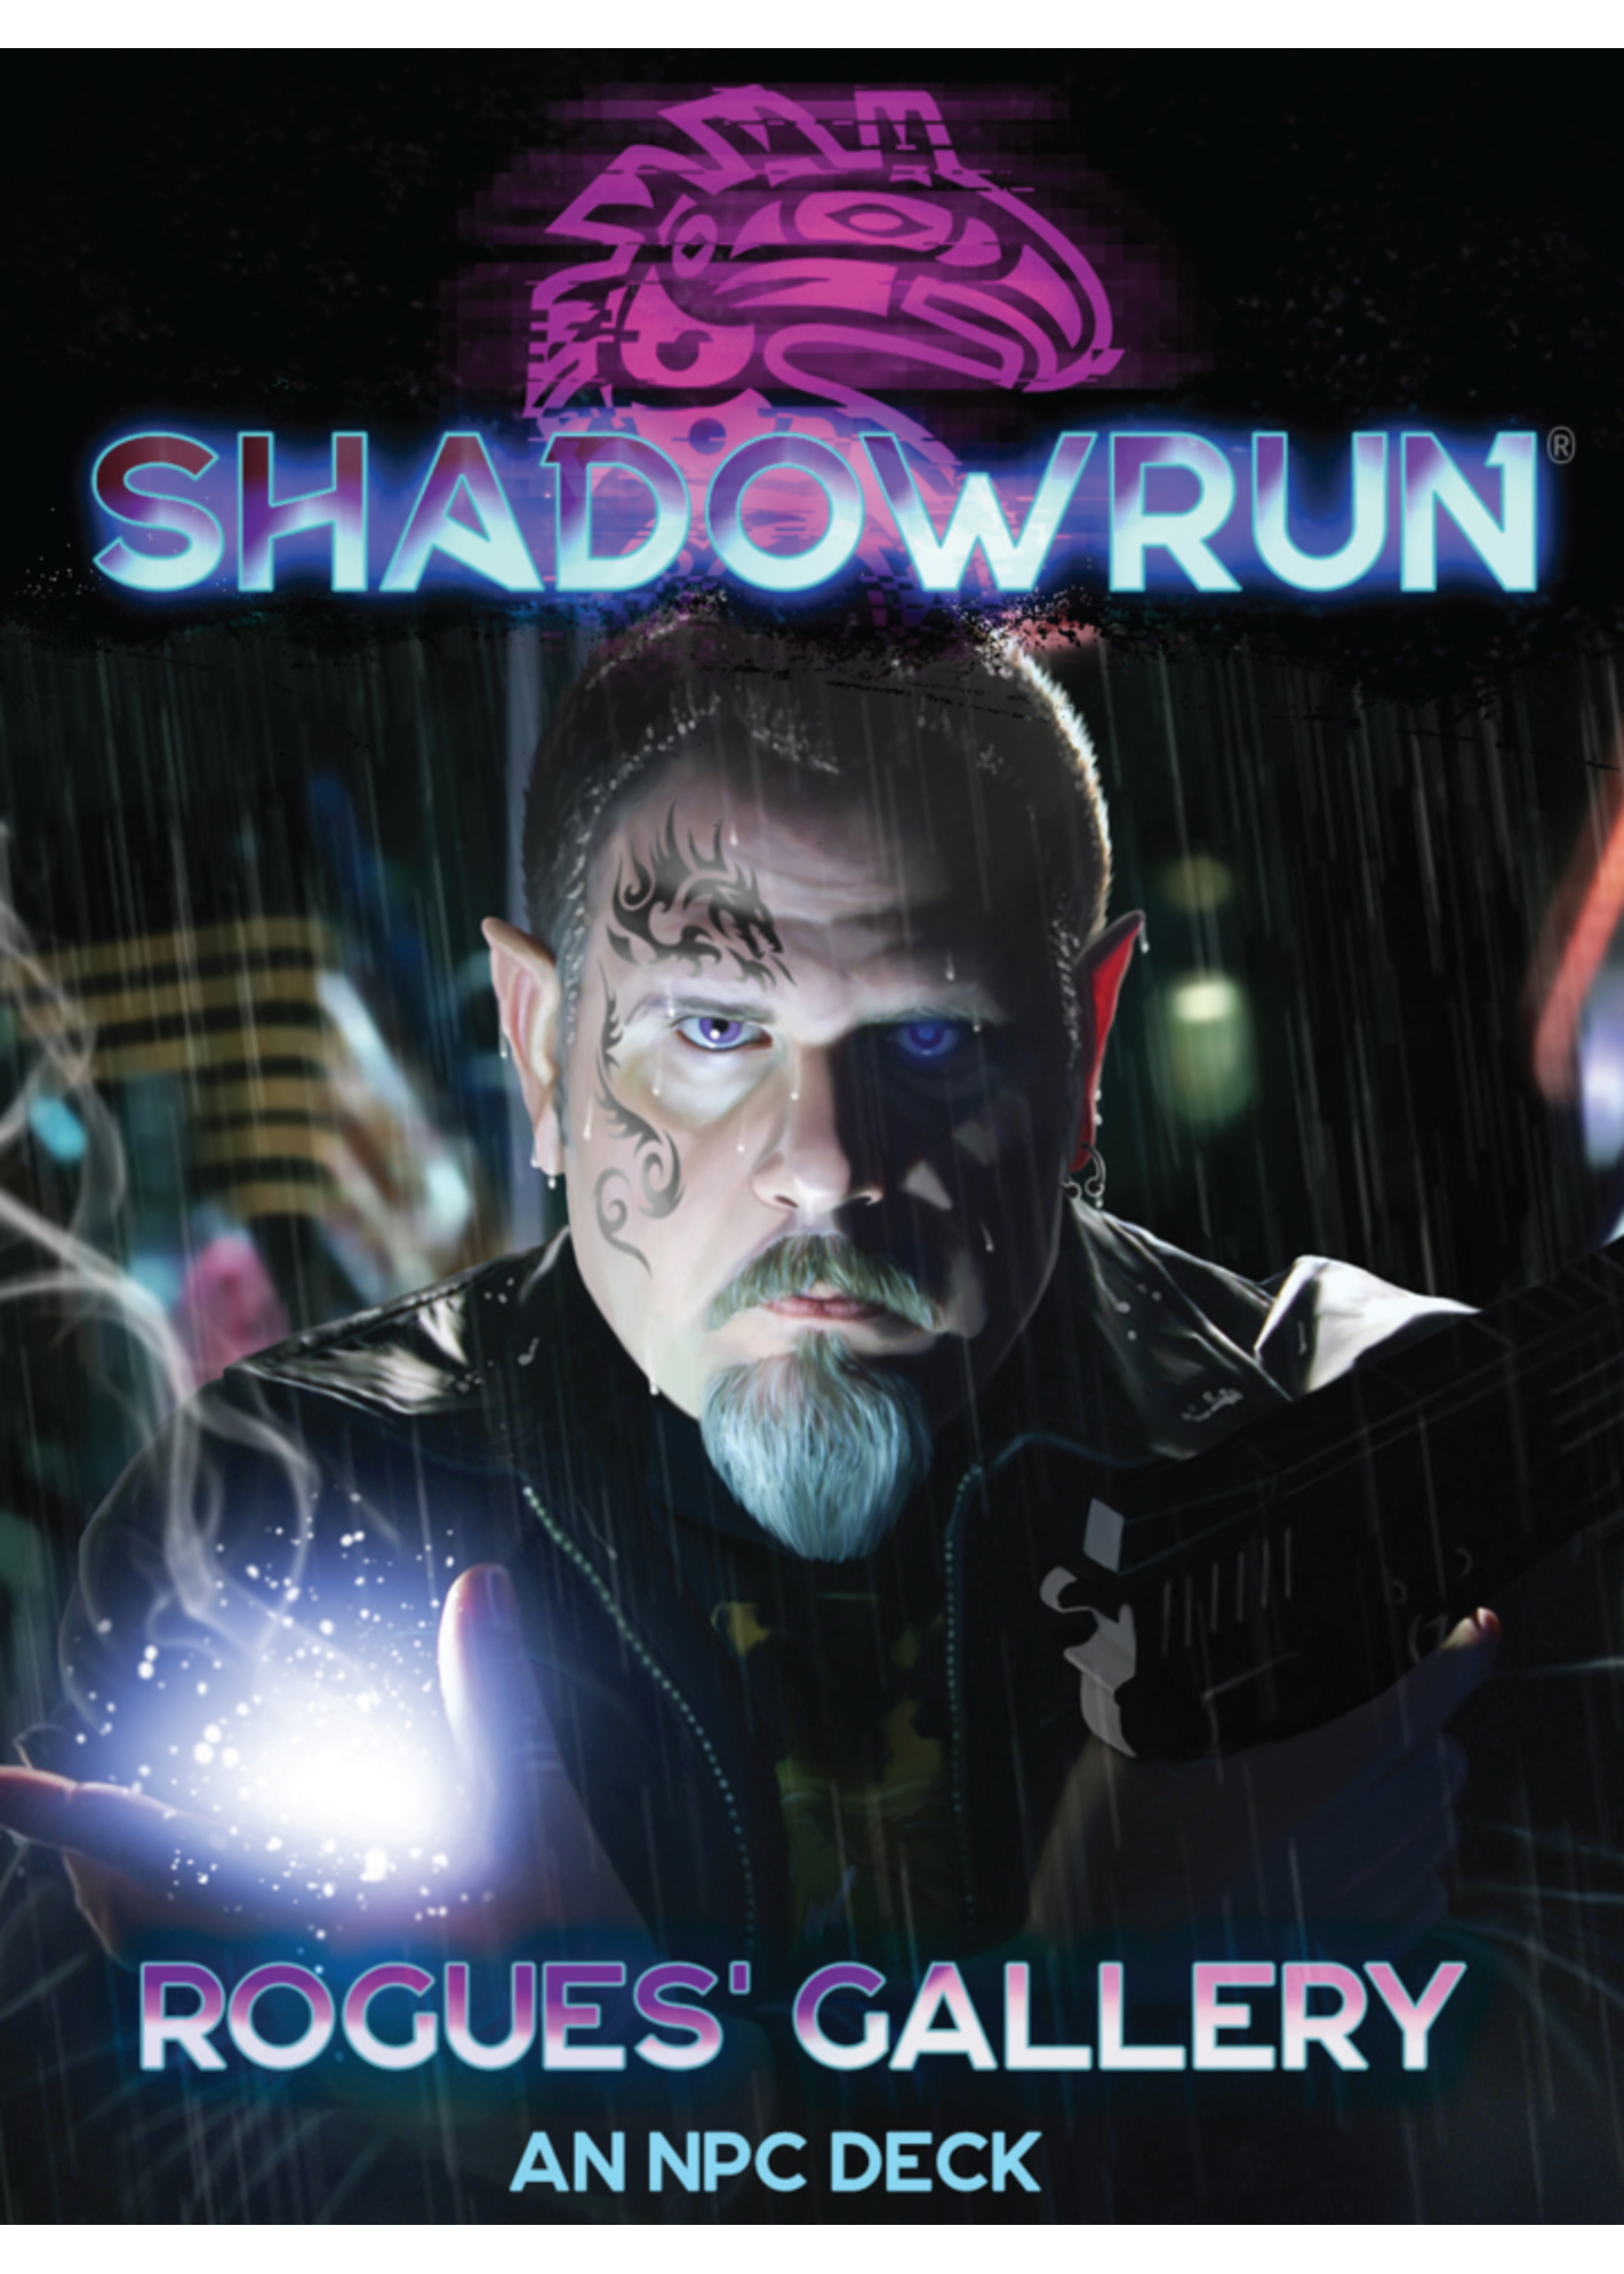 Shadowrun 6e Shadowrun, 6th Ed.: Rogues Gallery An NPC Deck